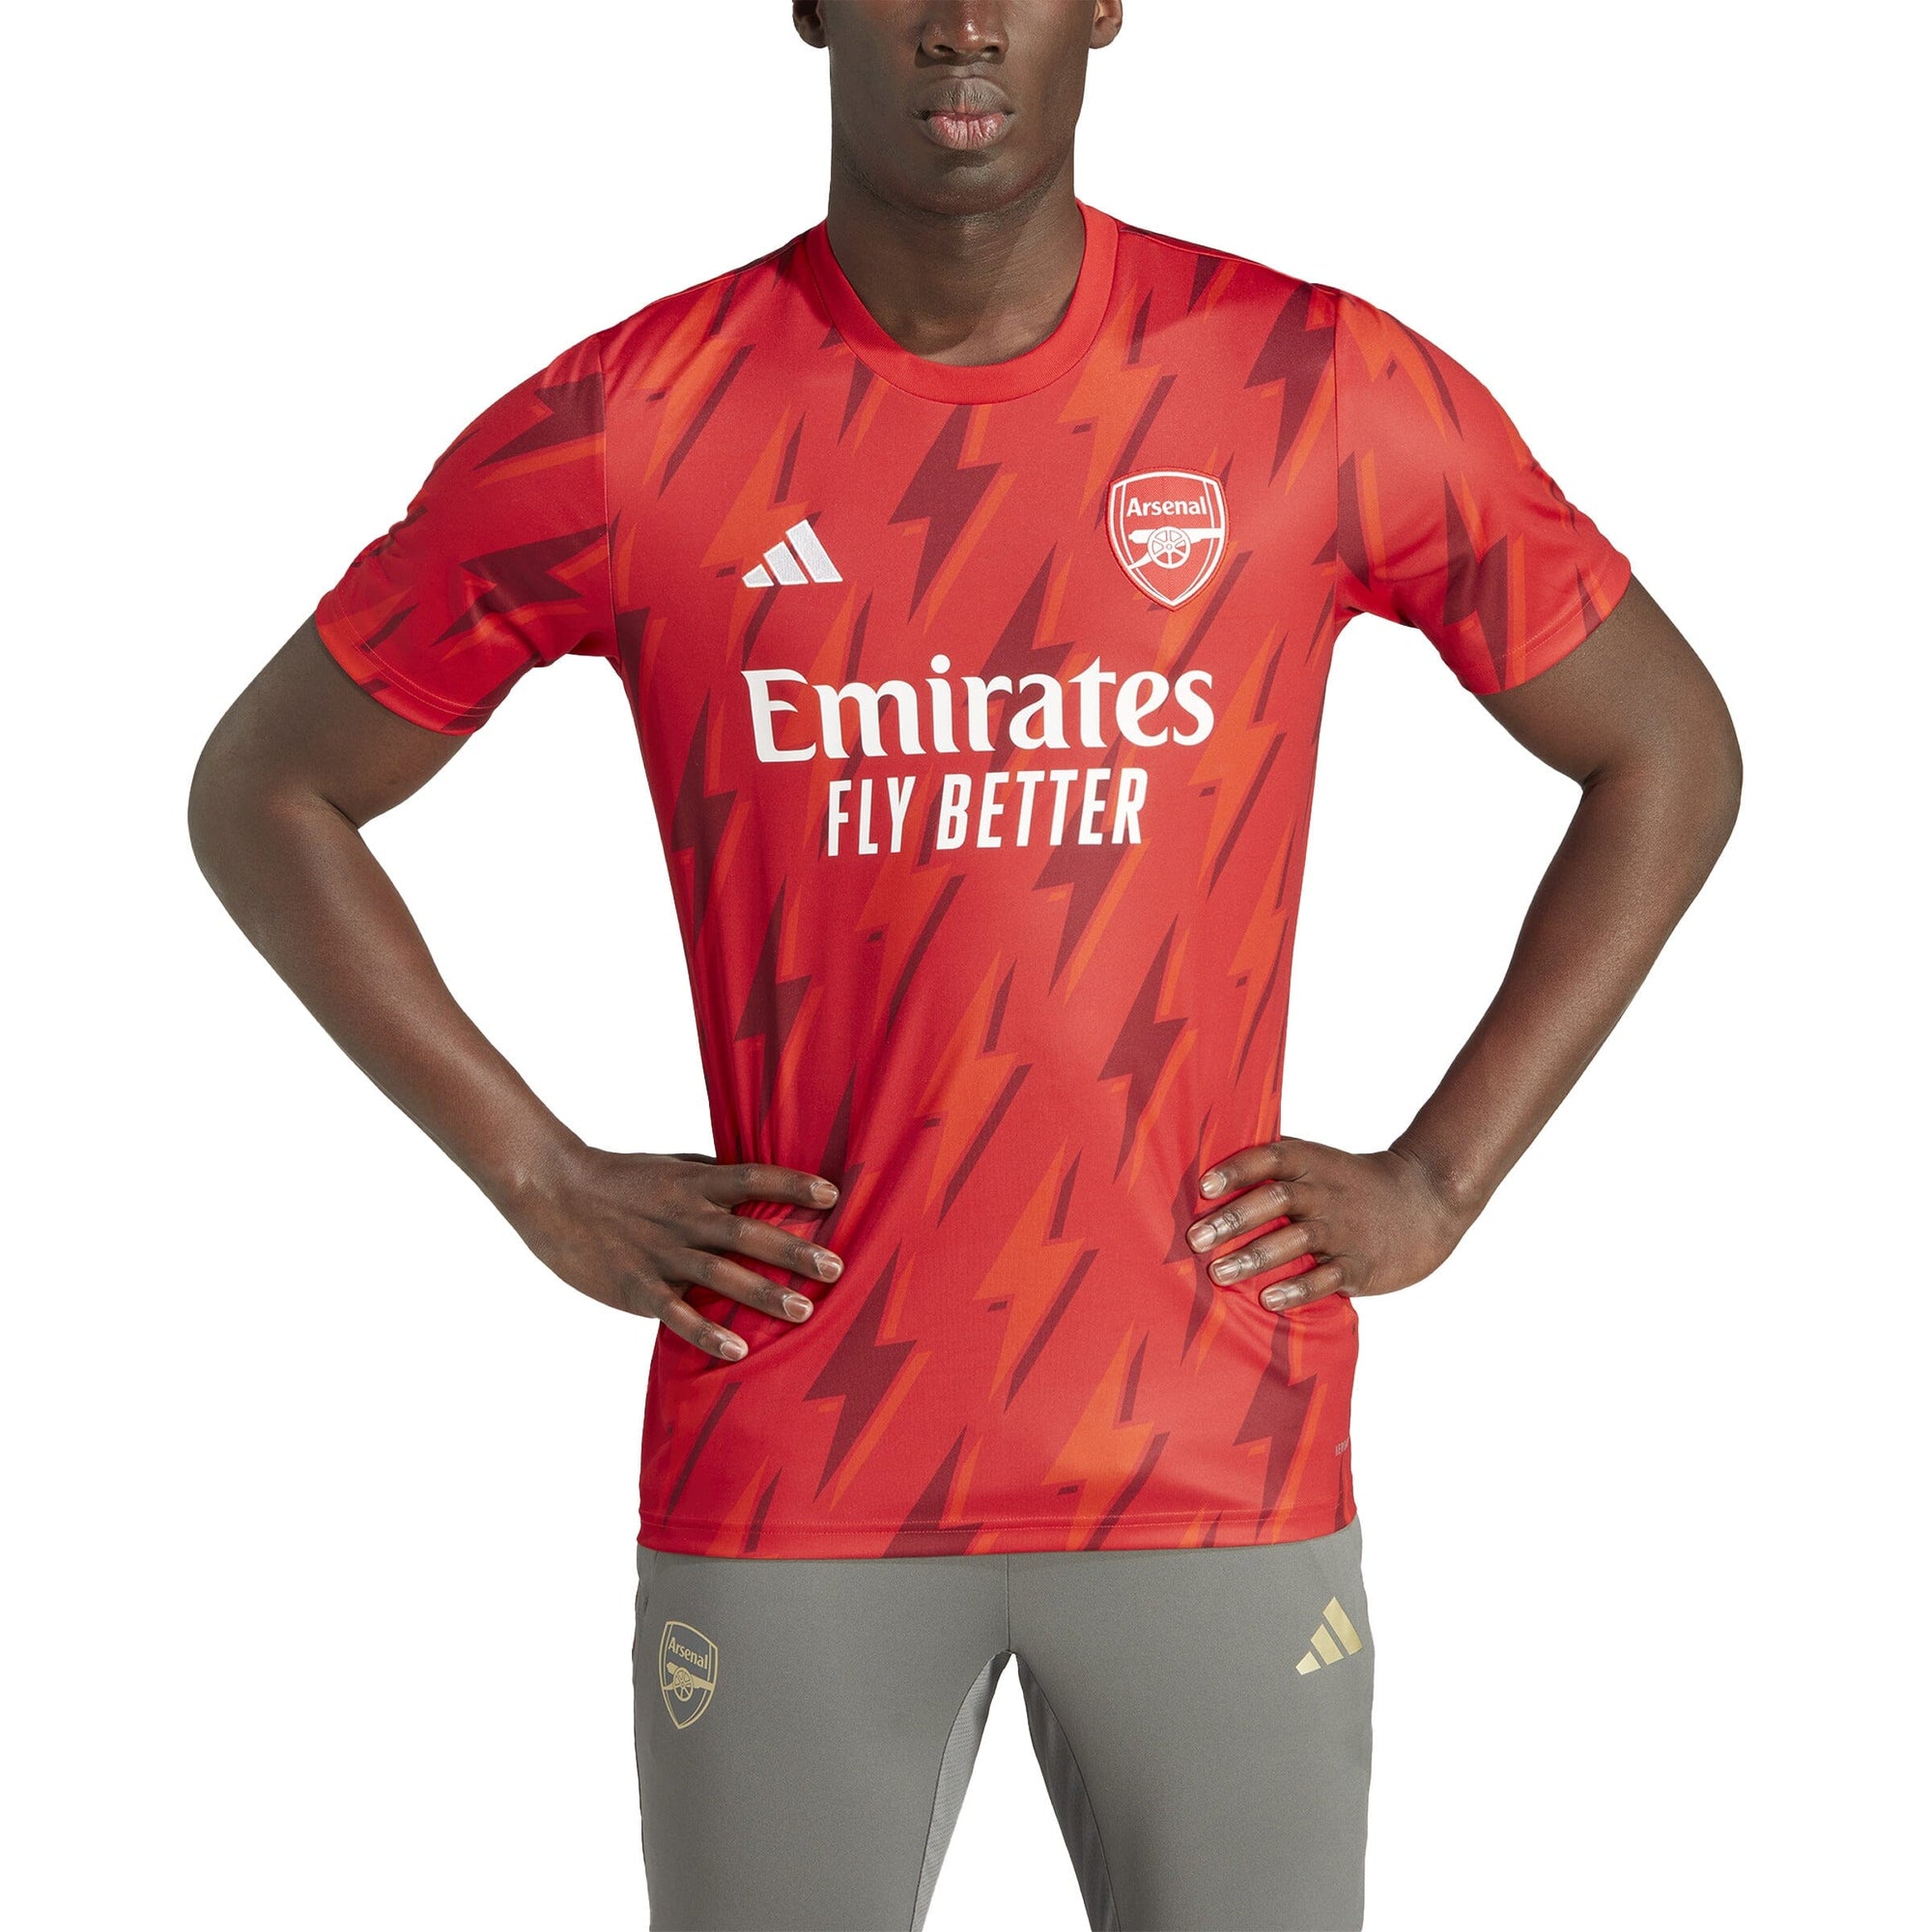 adidas Arsenal FC 23/24 Men's Third Jersey – Soccer Maxx